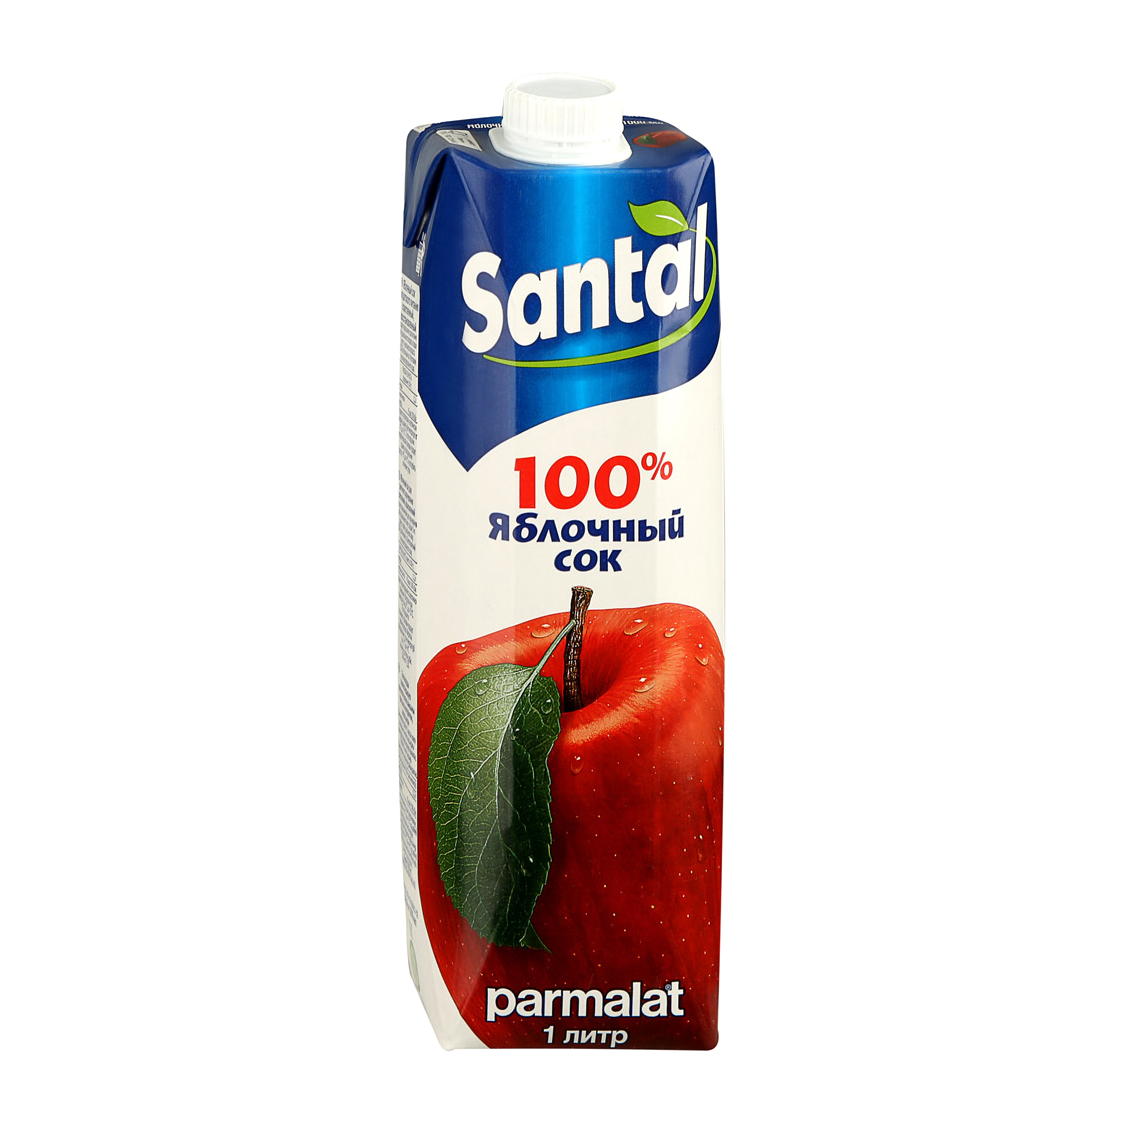 Сок Santal яблочный 100% 1 л сок santal гранат 1 л